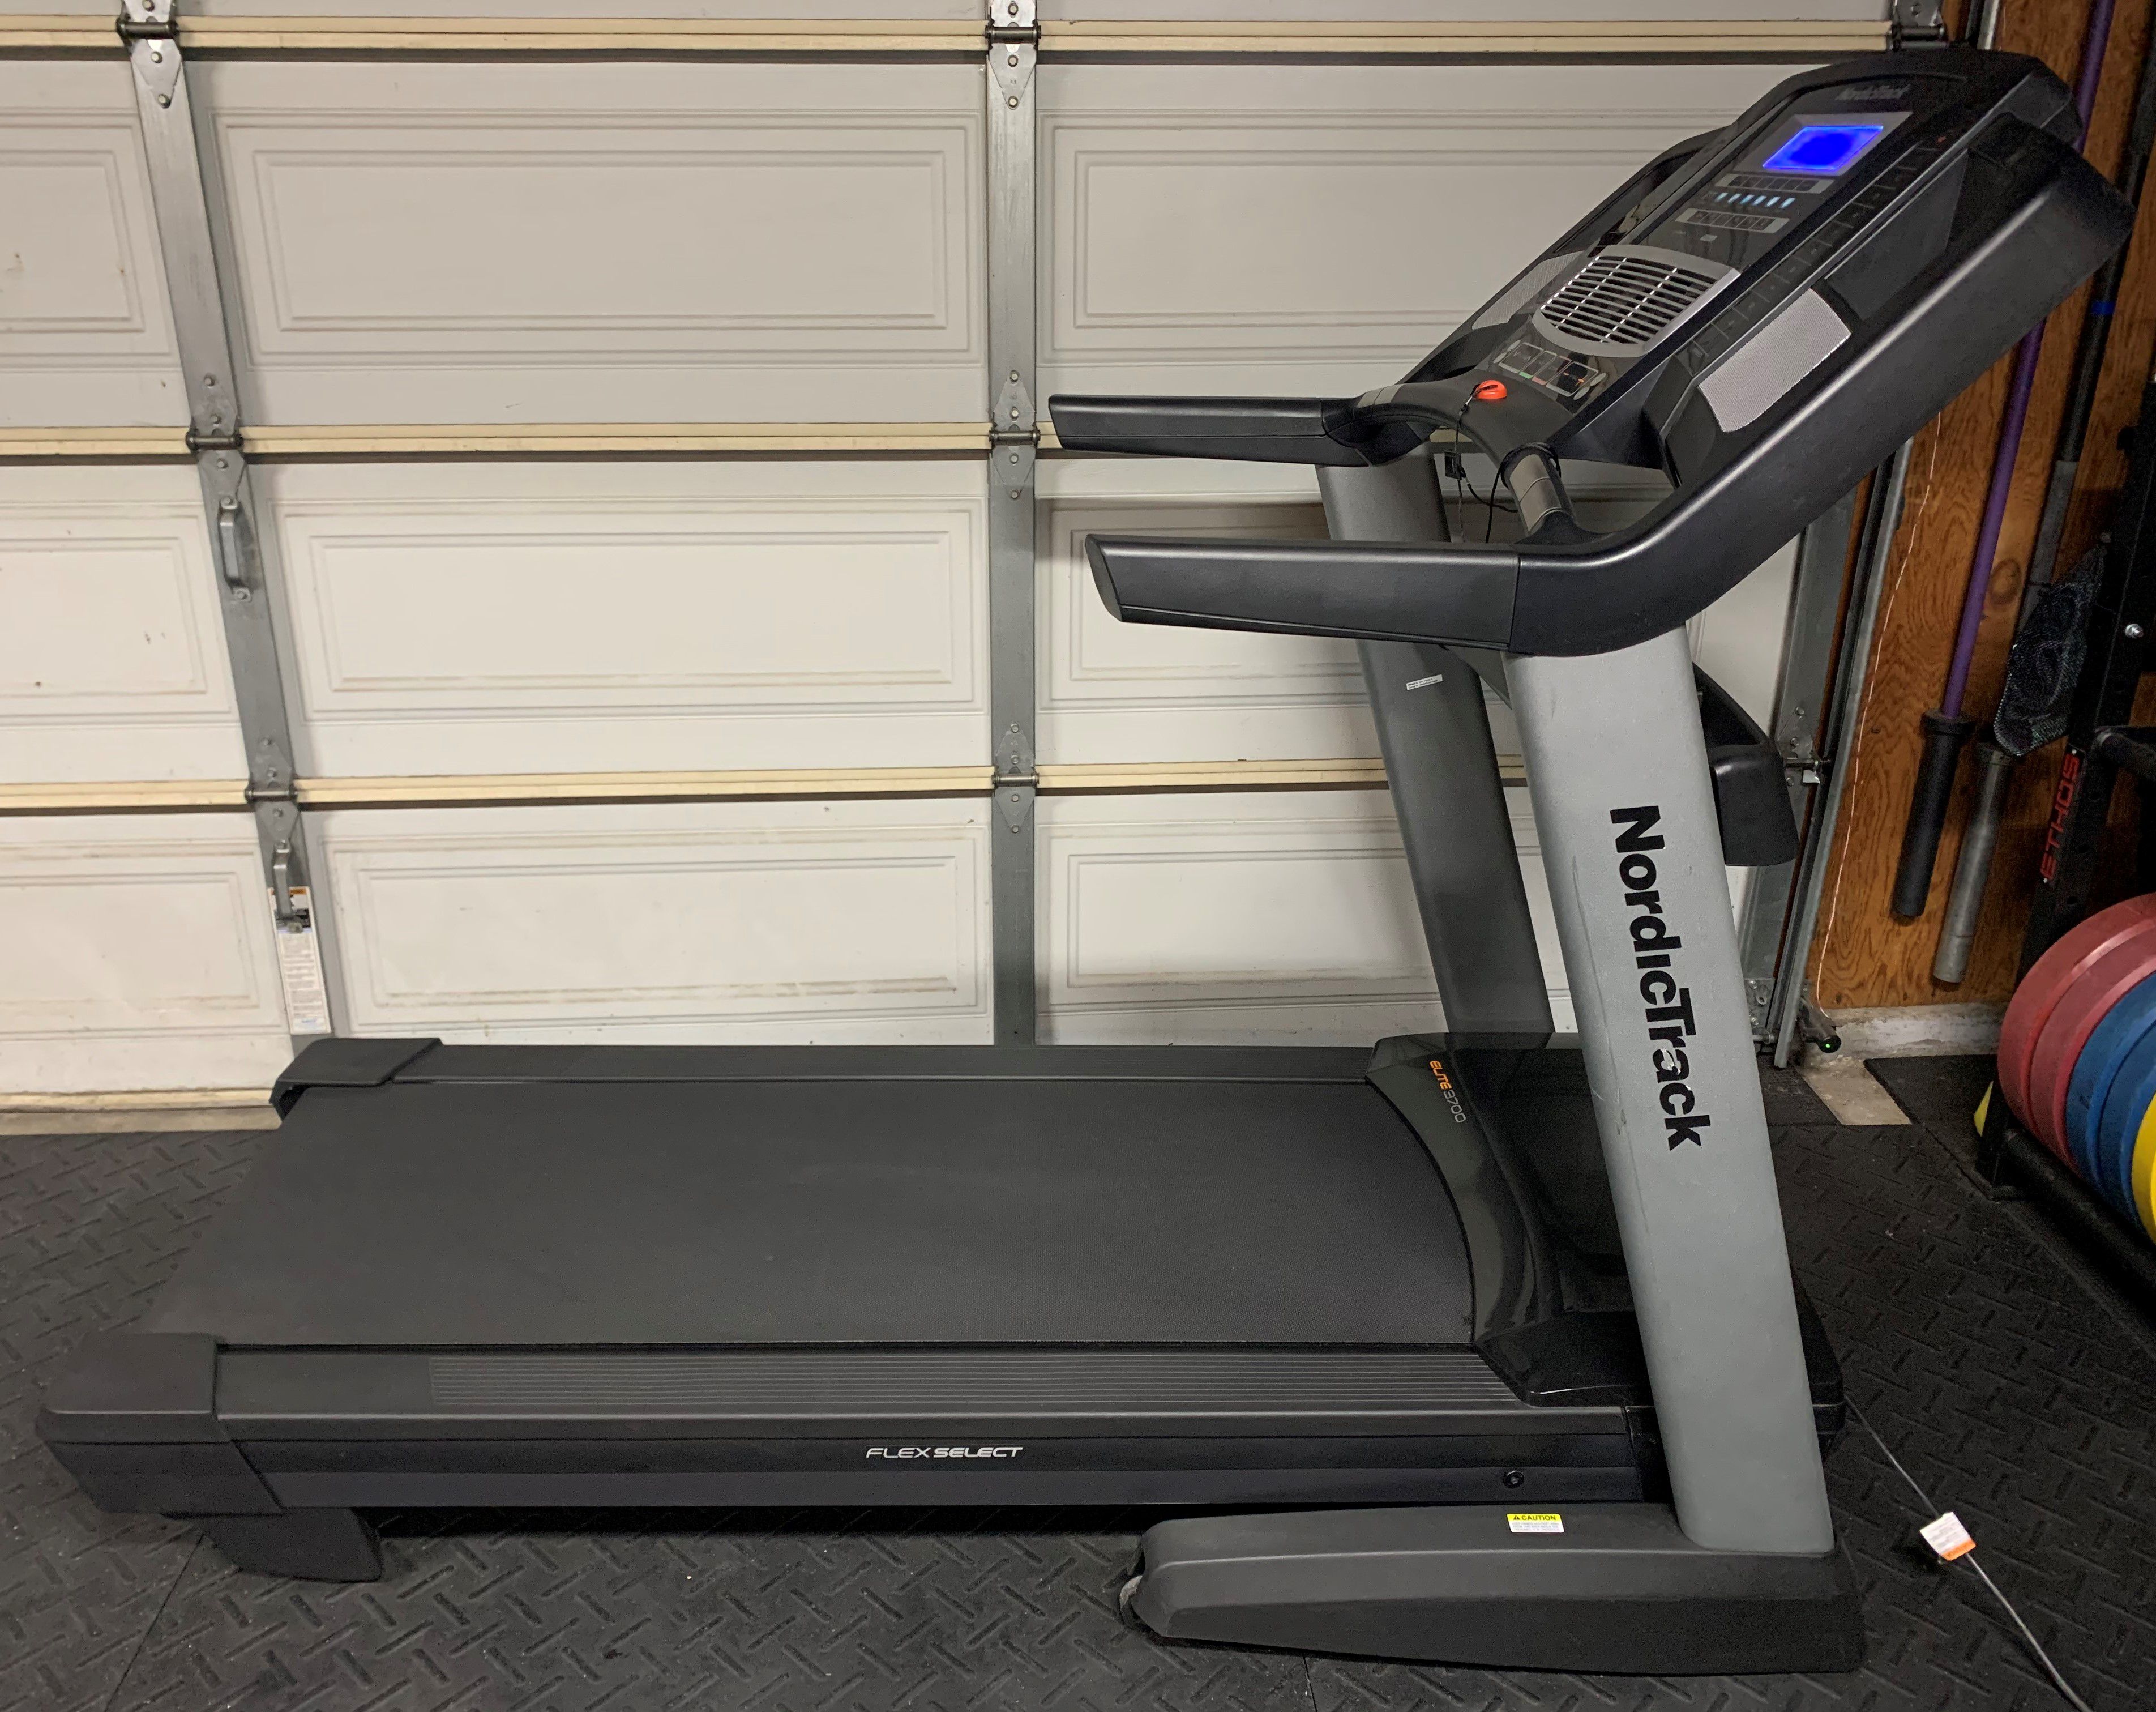 NordicTrack Elite 3700 Treadmill Walk/Run/Jog Trainer Exercise Machine Workout Fitness Foldable